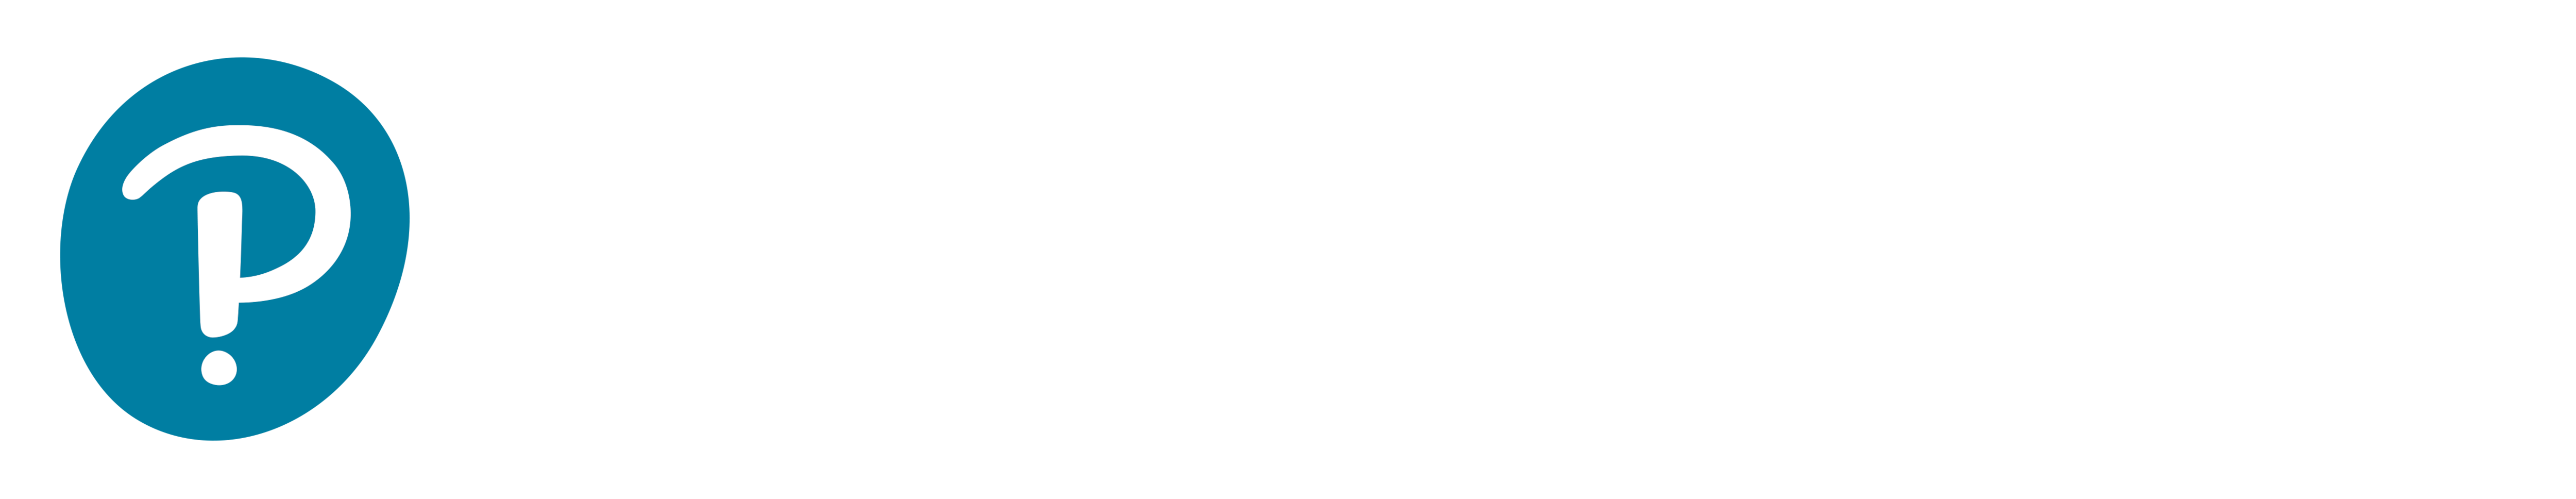 Pearson TalentLens